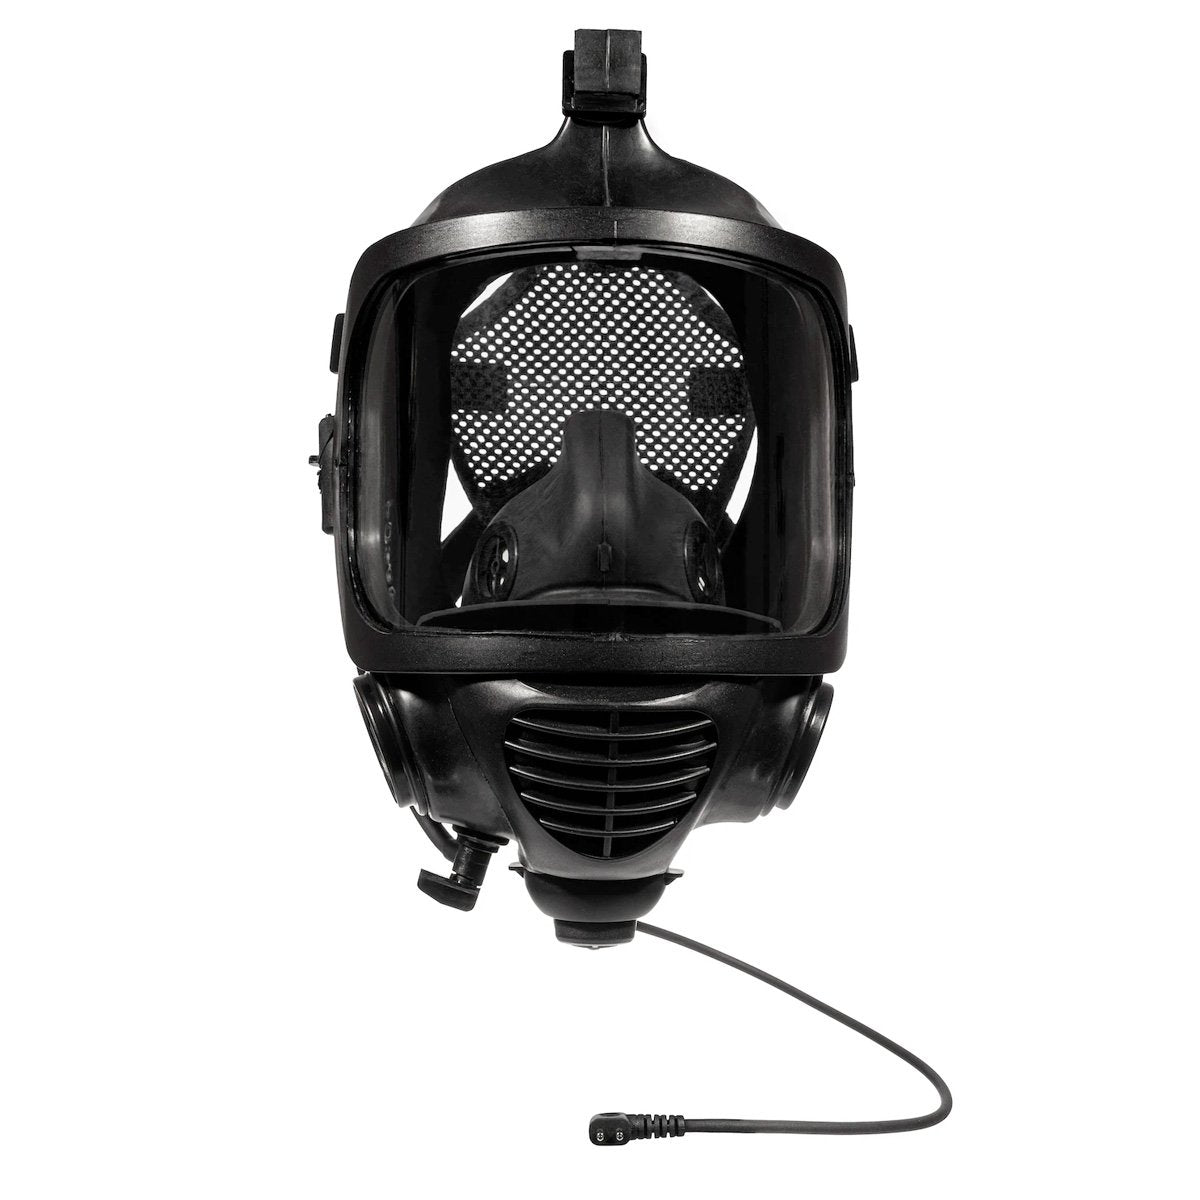 MIRA Safety Gas Mask Microphone Comms Kit CM-6M, CM-7M, CM-8M, & TAPR Tactical Distributors Ltd New Zealand